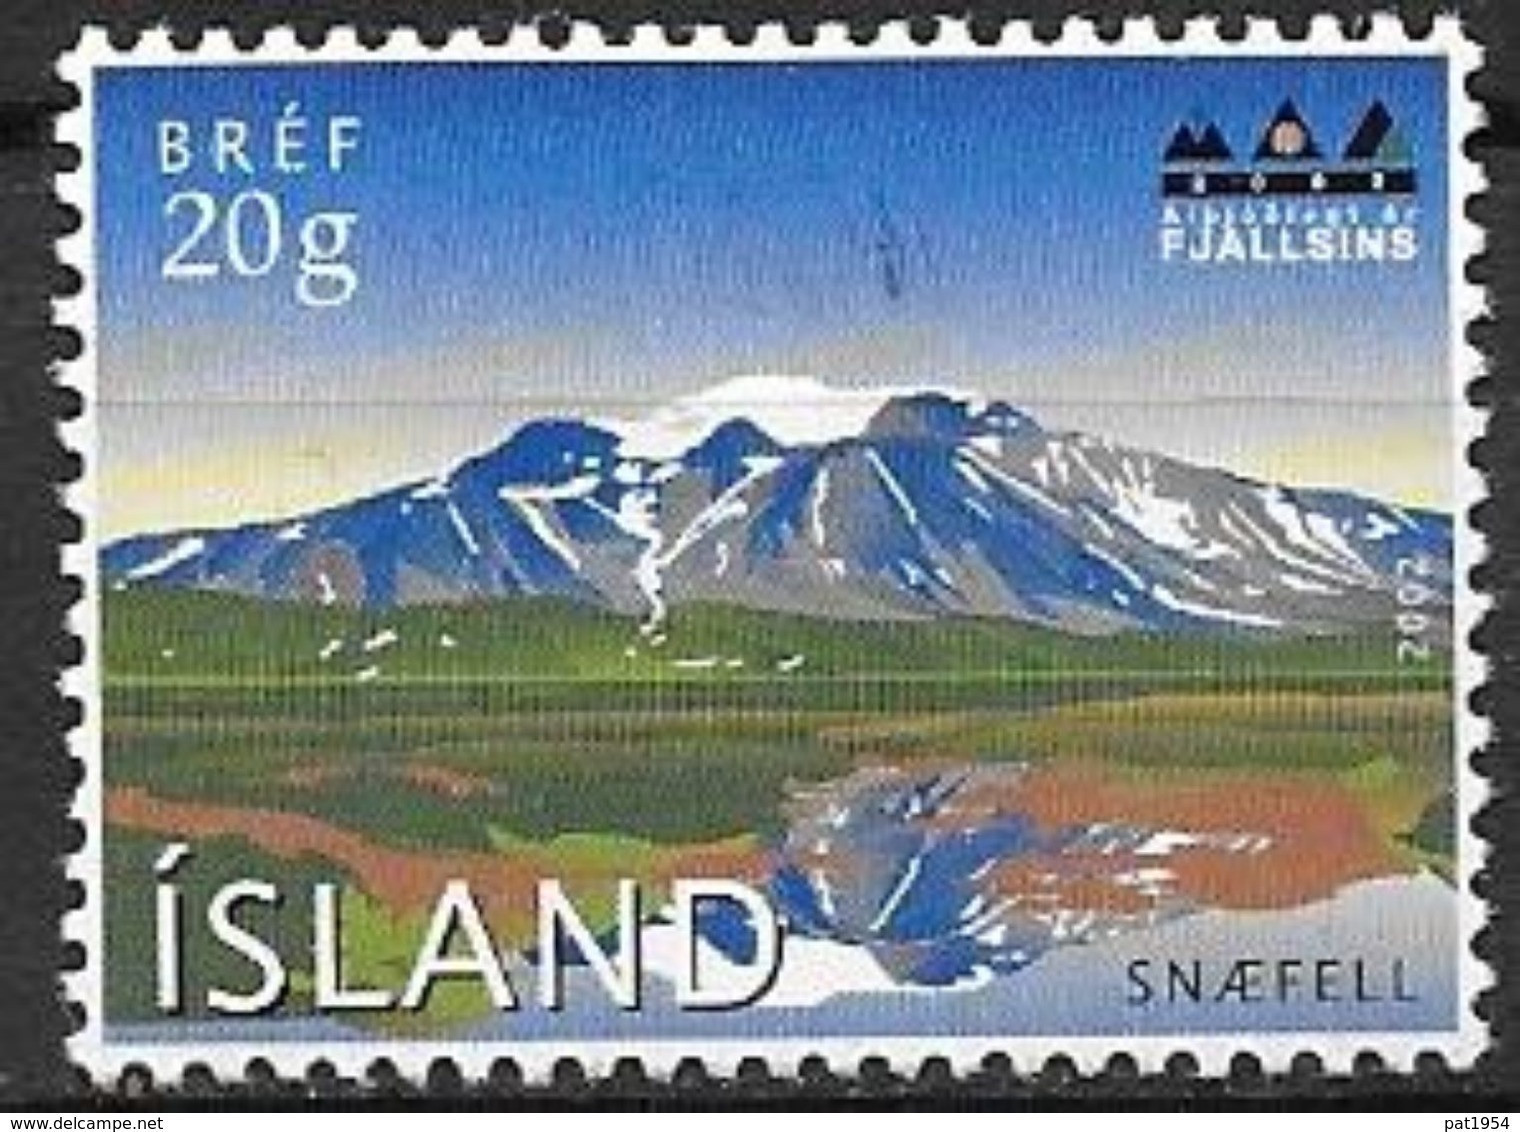 Islande 2002 N°932 Neuf** Année De La Montagne Snaefel - Nuovi